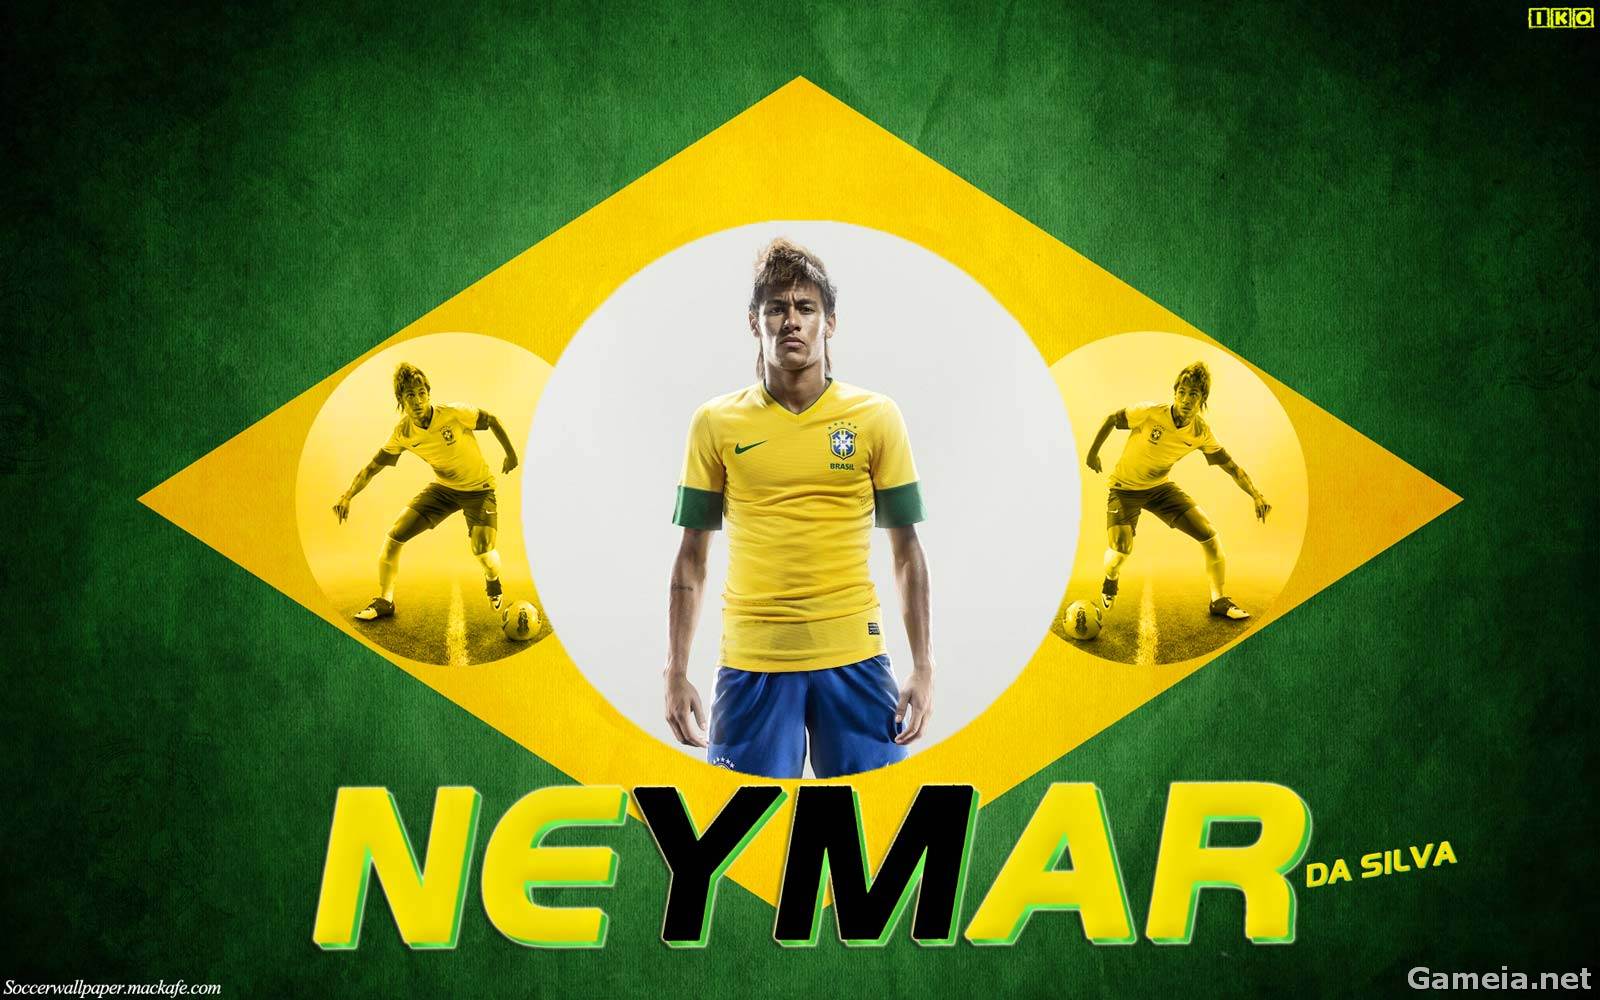 Neymar Da Silva 2015 Wallpaper HD. Gameia.net